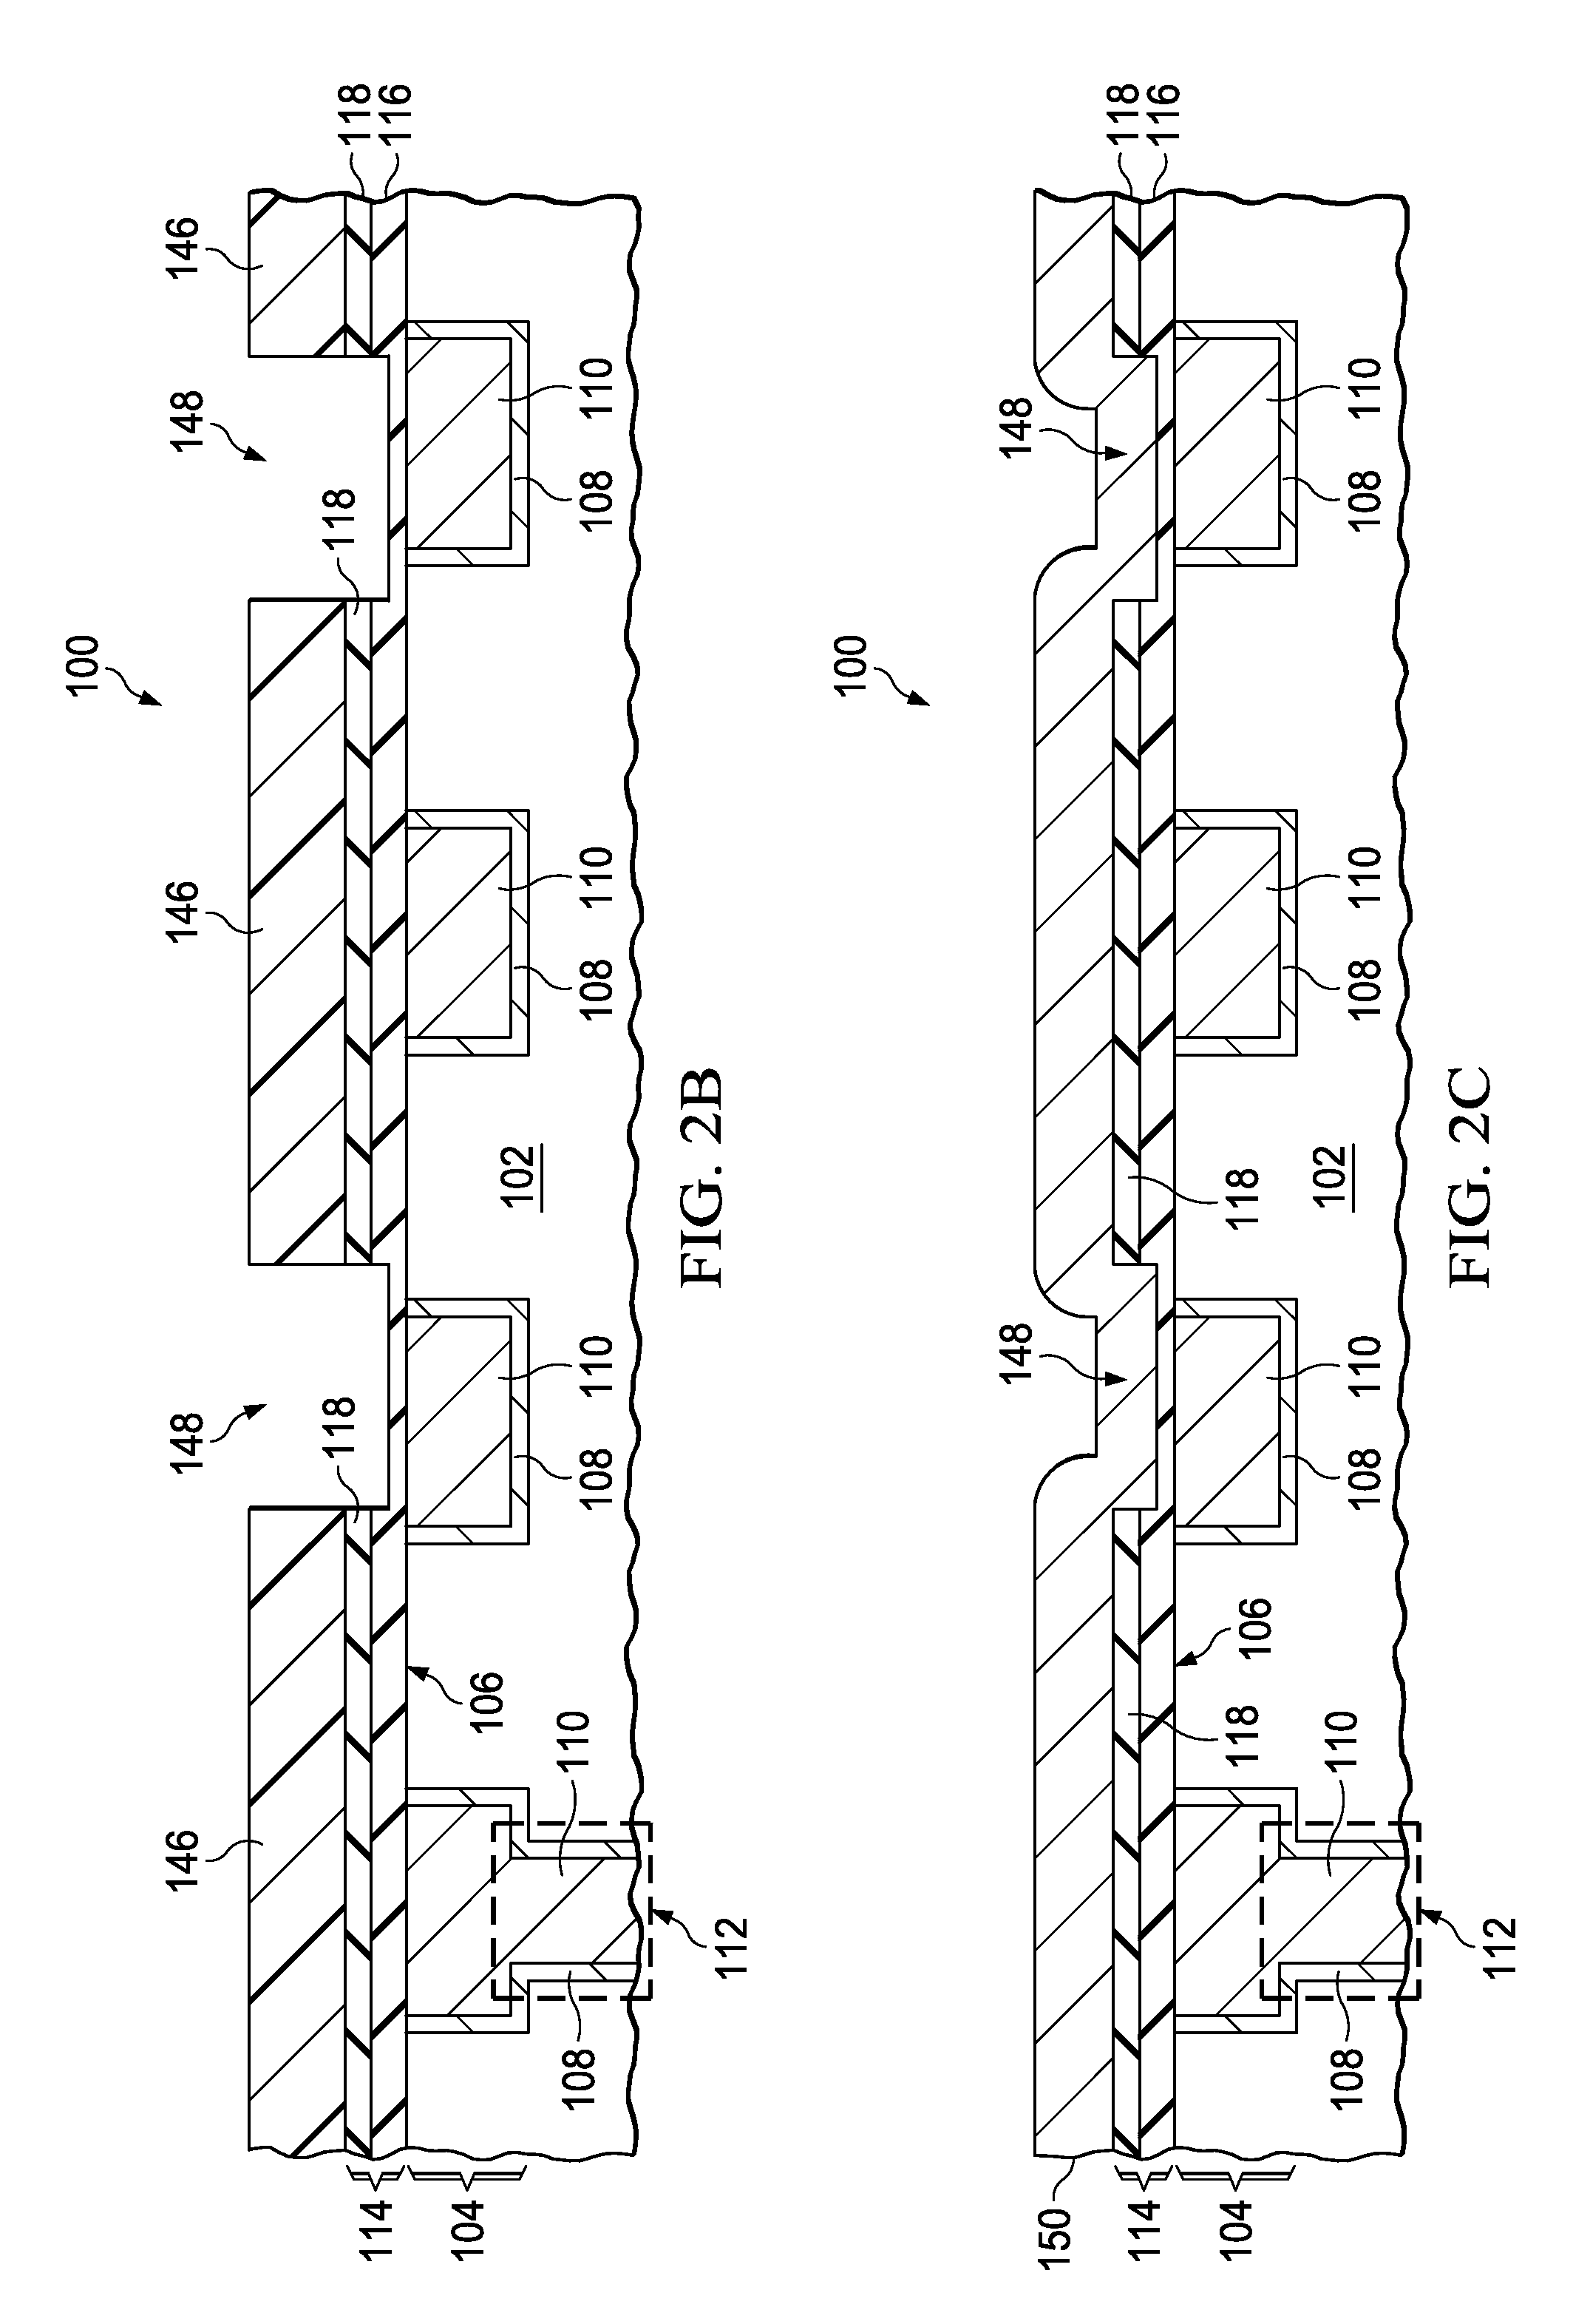 Thin film resistor integration in copper damascene metallization